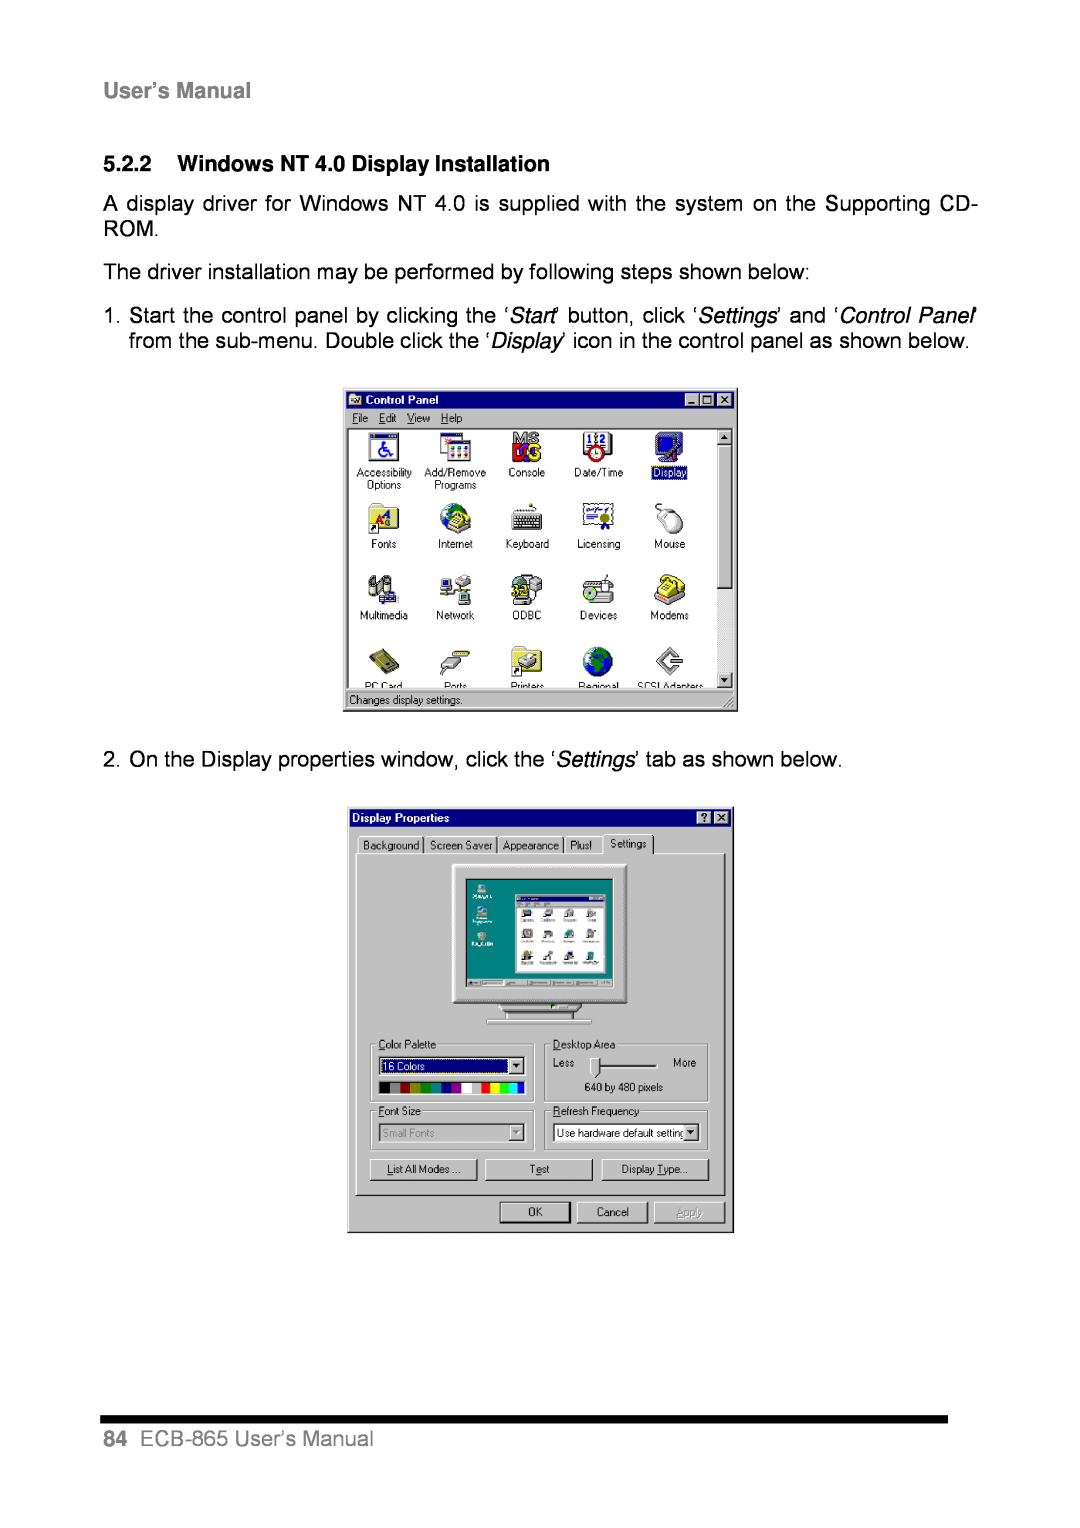 Intel user manual 5.2.2Windows NT 4.0 Display Installation, 84ECB-865User’s Manual 